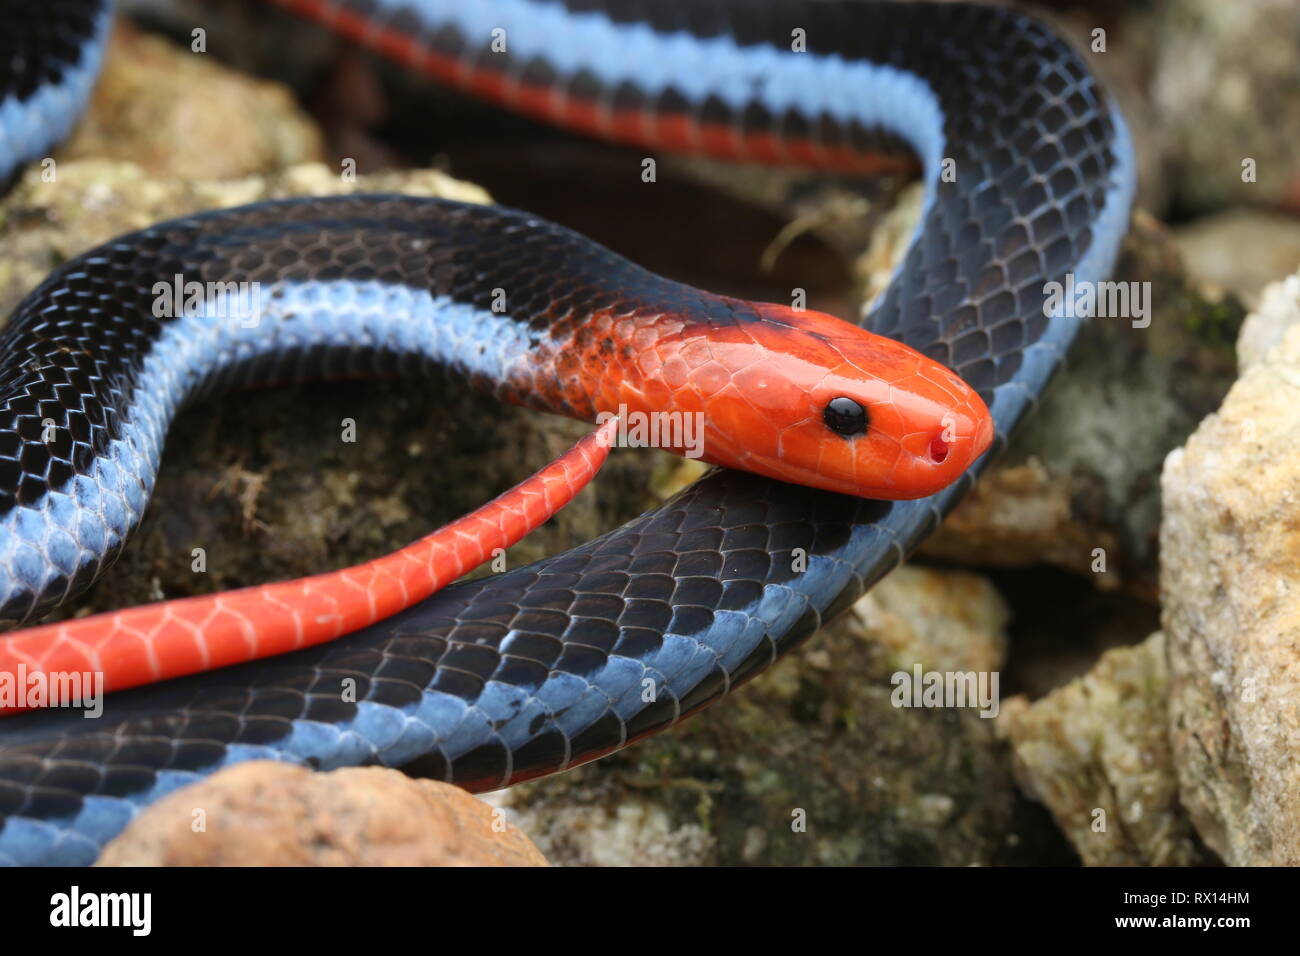 Malayan Blue Coral Snake Stock Photo